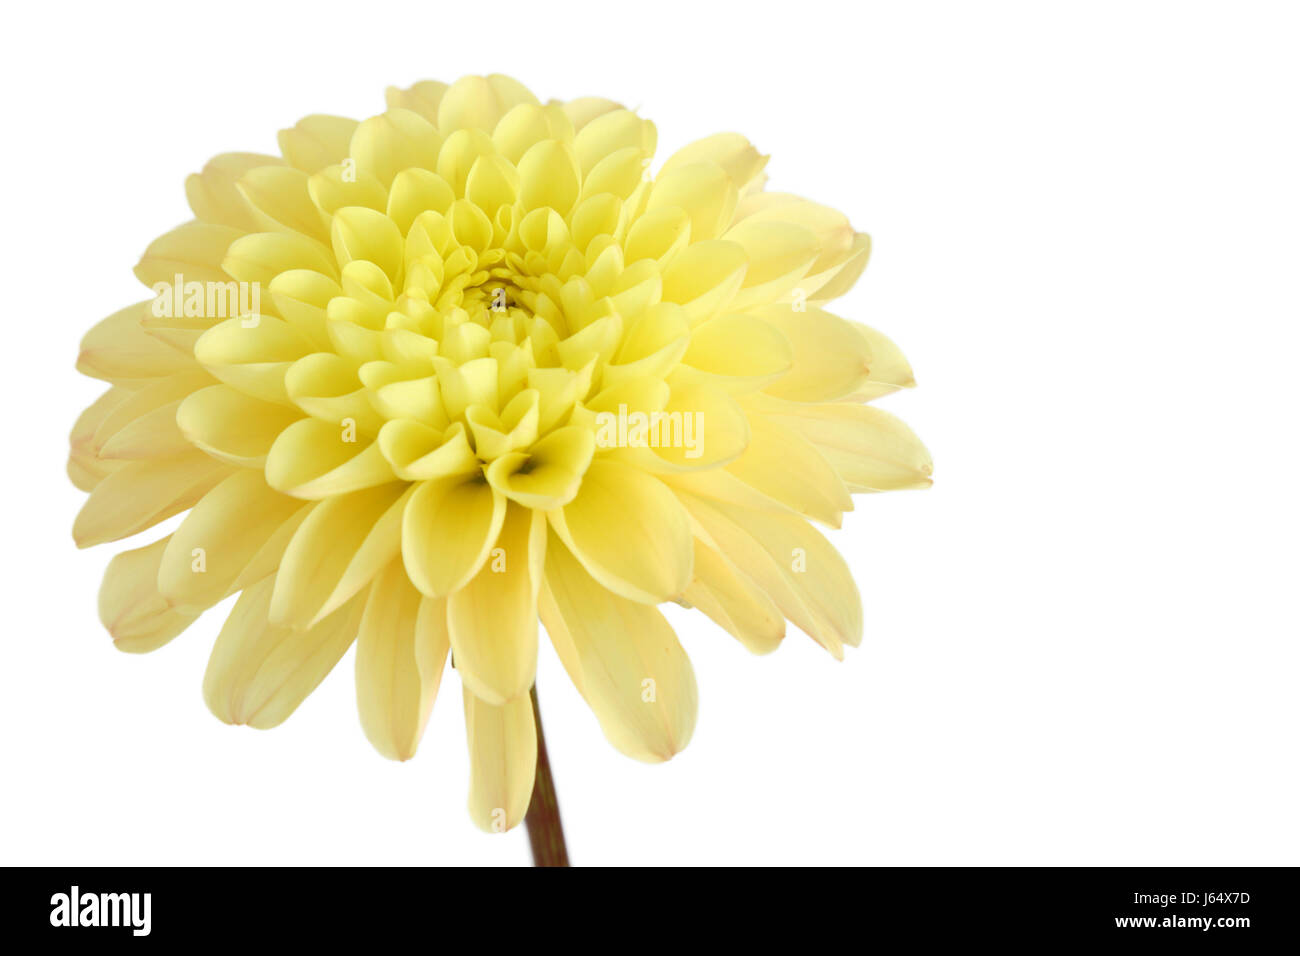 isolated flower plant bloom blossom flourish flourishing dahlia decoration Stock Photo